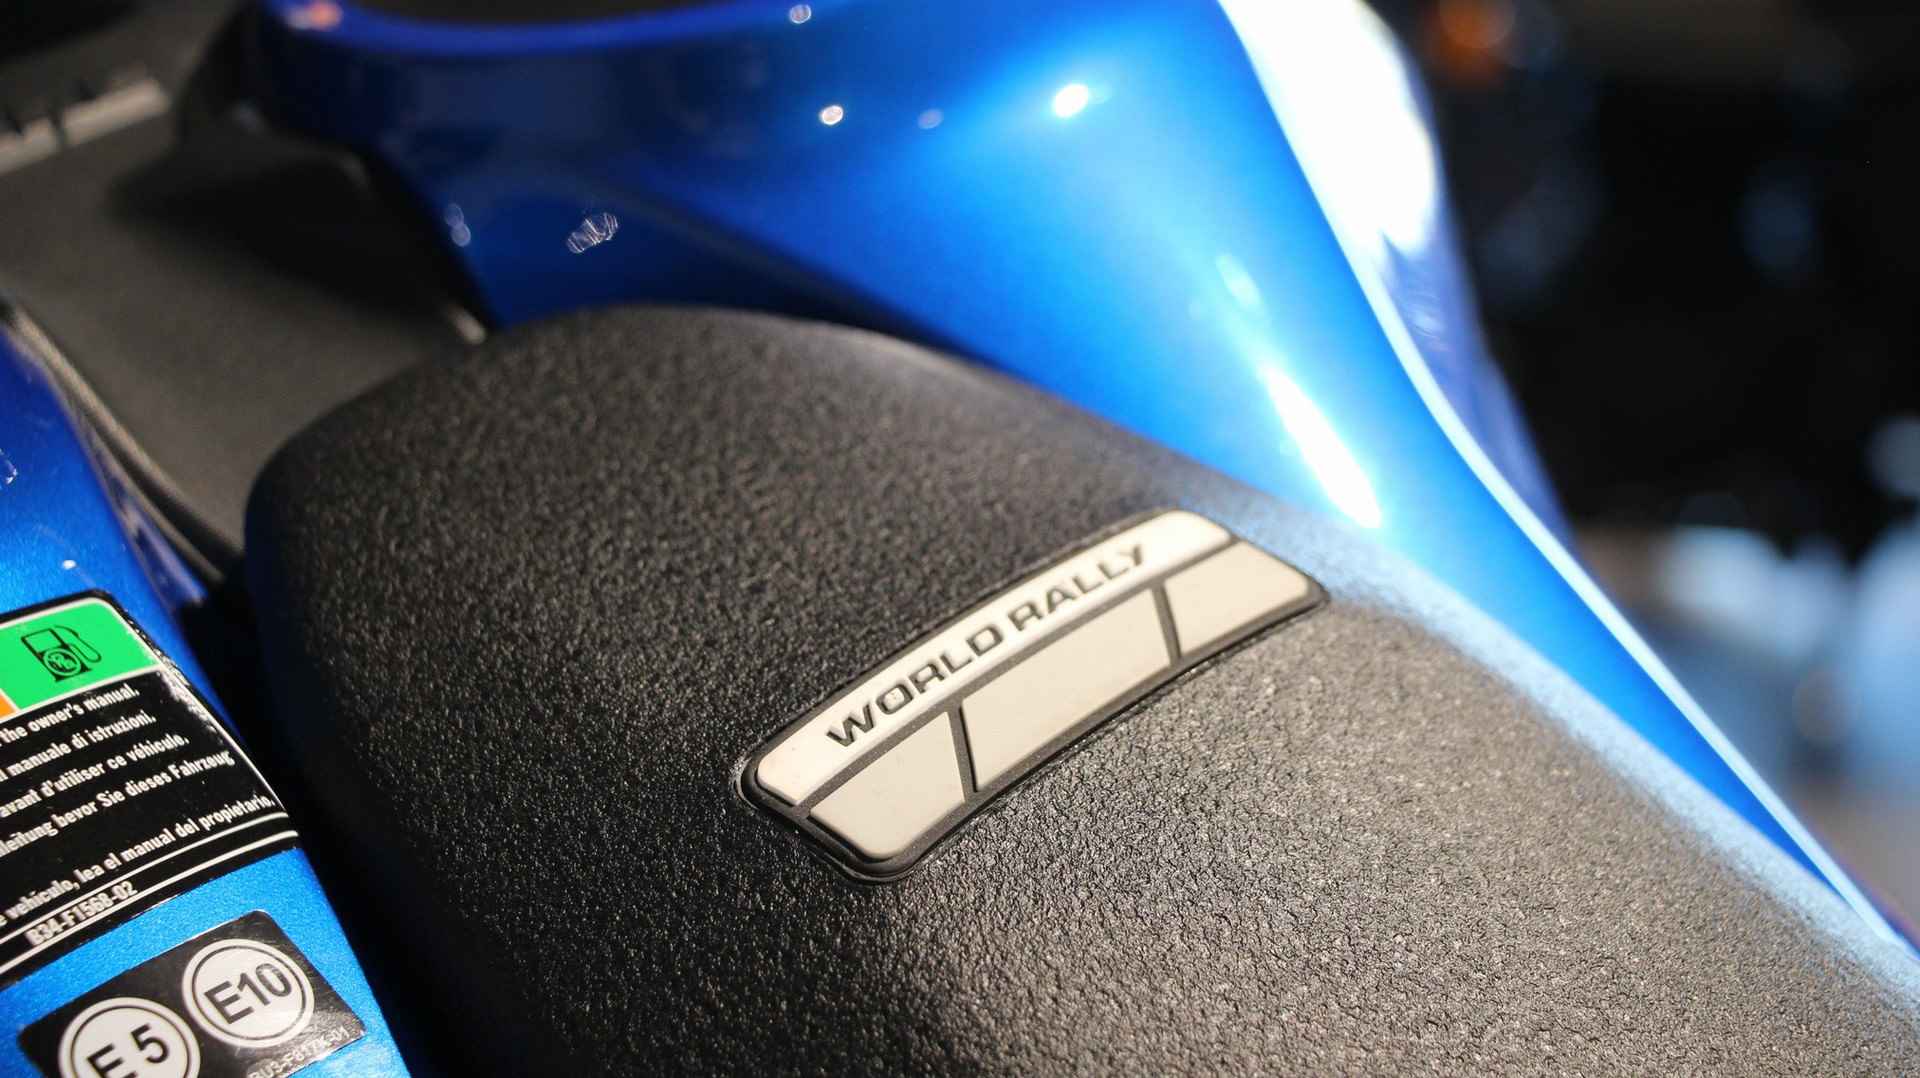 Yamaha TENERE WORLD RALLY LET OP NU 1500,- INRUIL VOORDEEL - 16/23